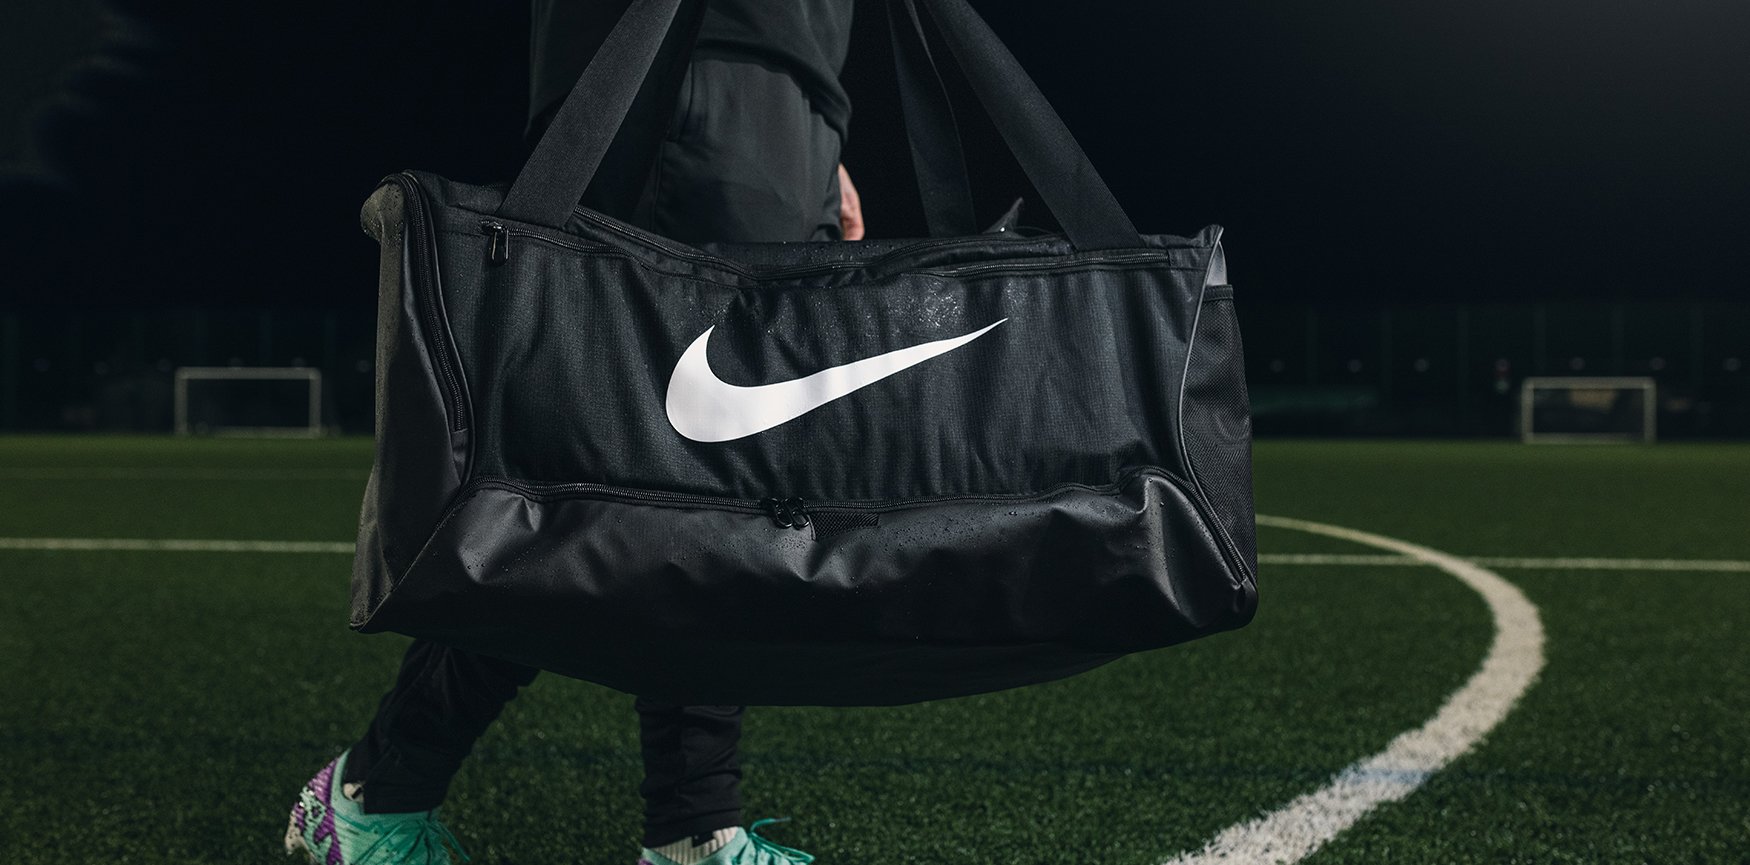 Nike Kitbag on-pitch